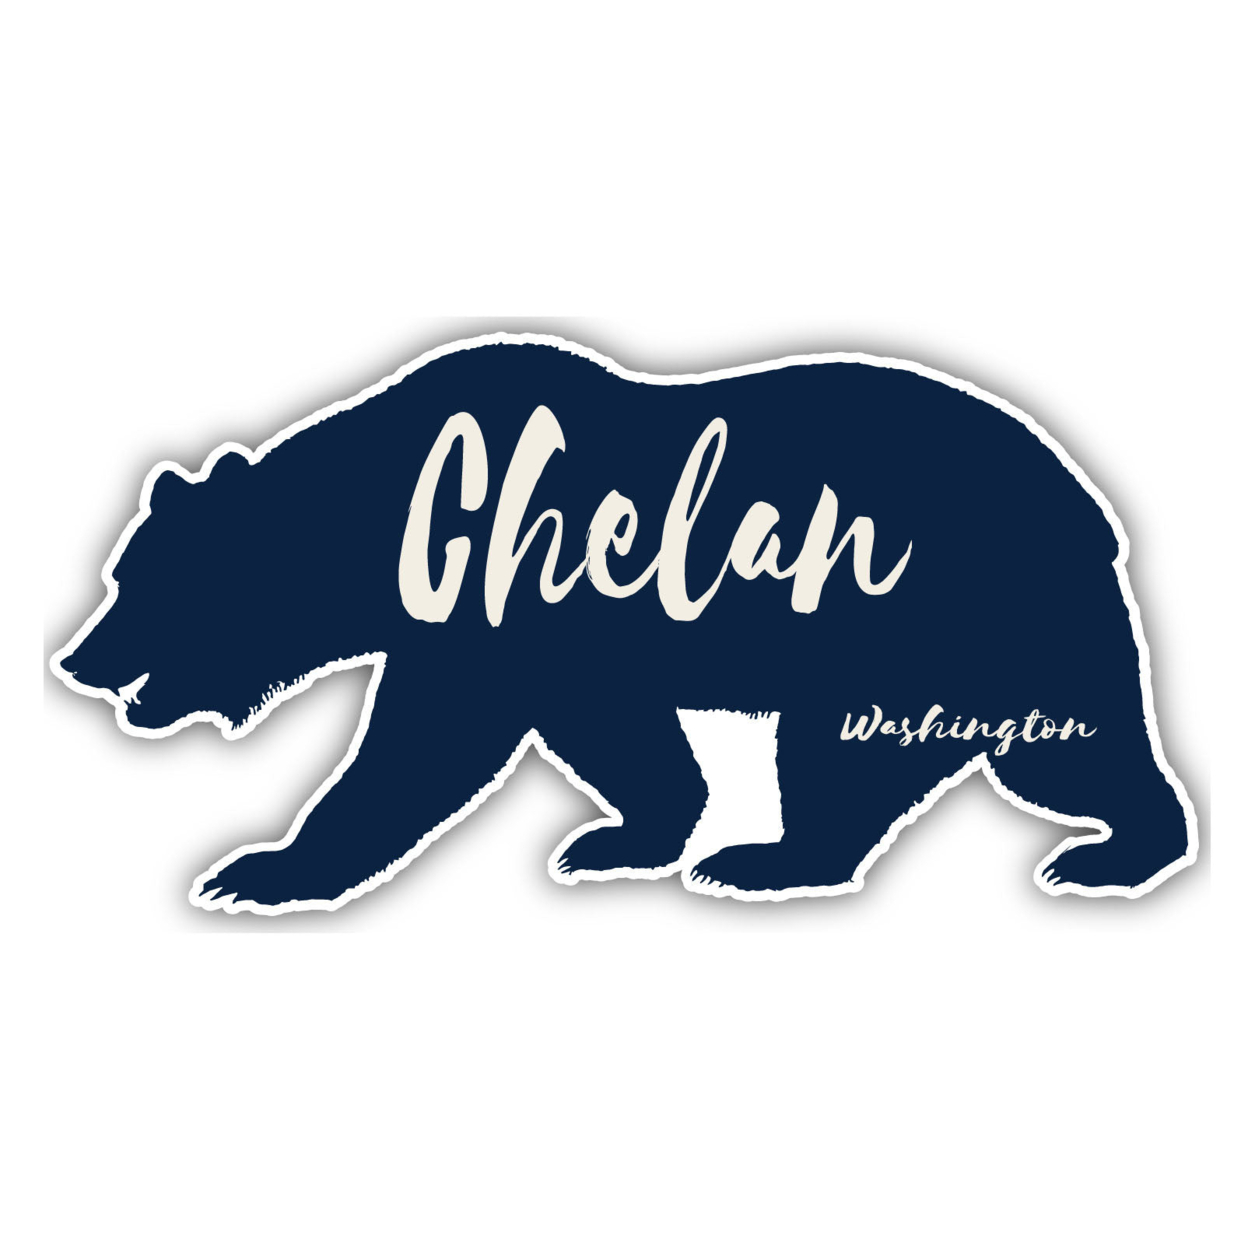 Chelan Washington Souvenir Decorative Stickers (Choose Theme And Size) - Single Unit, 2-Inch, Tent